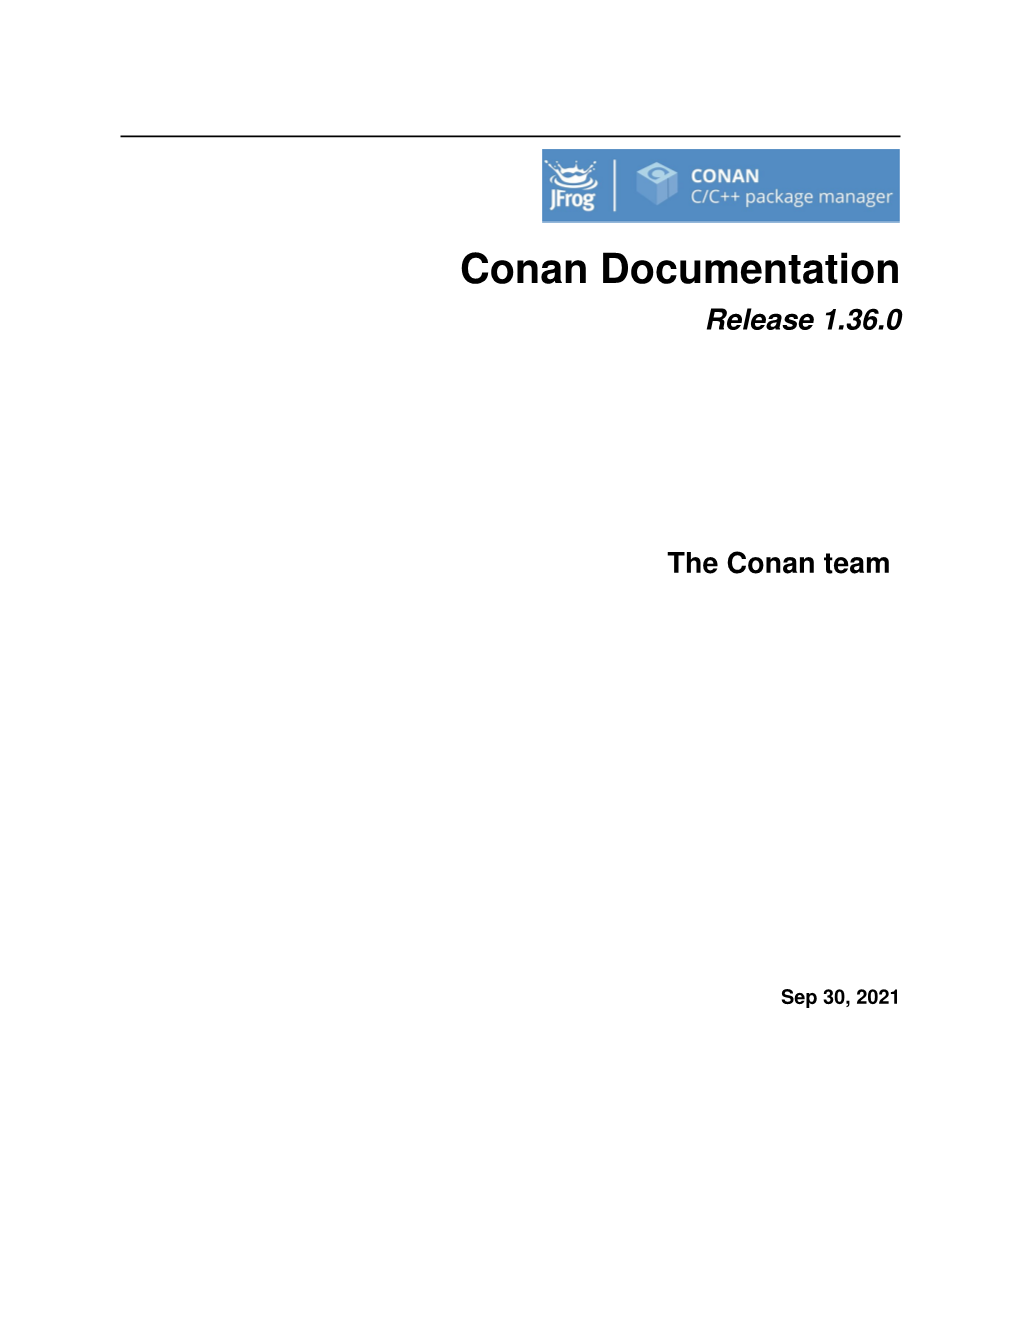 Conan Documentation Release 1.36.0